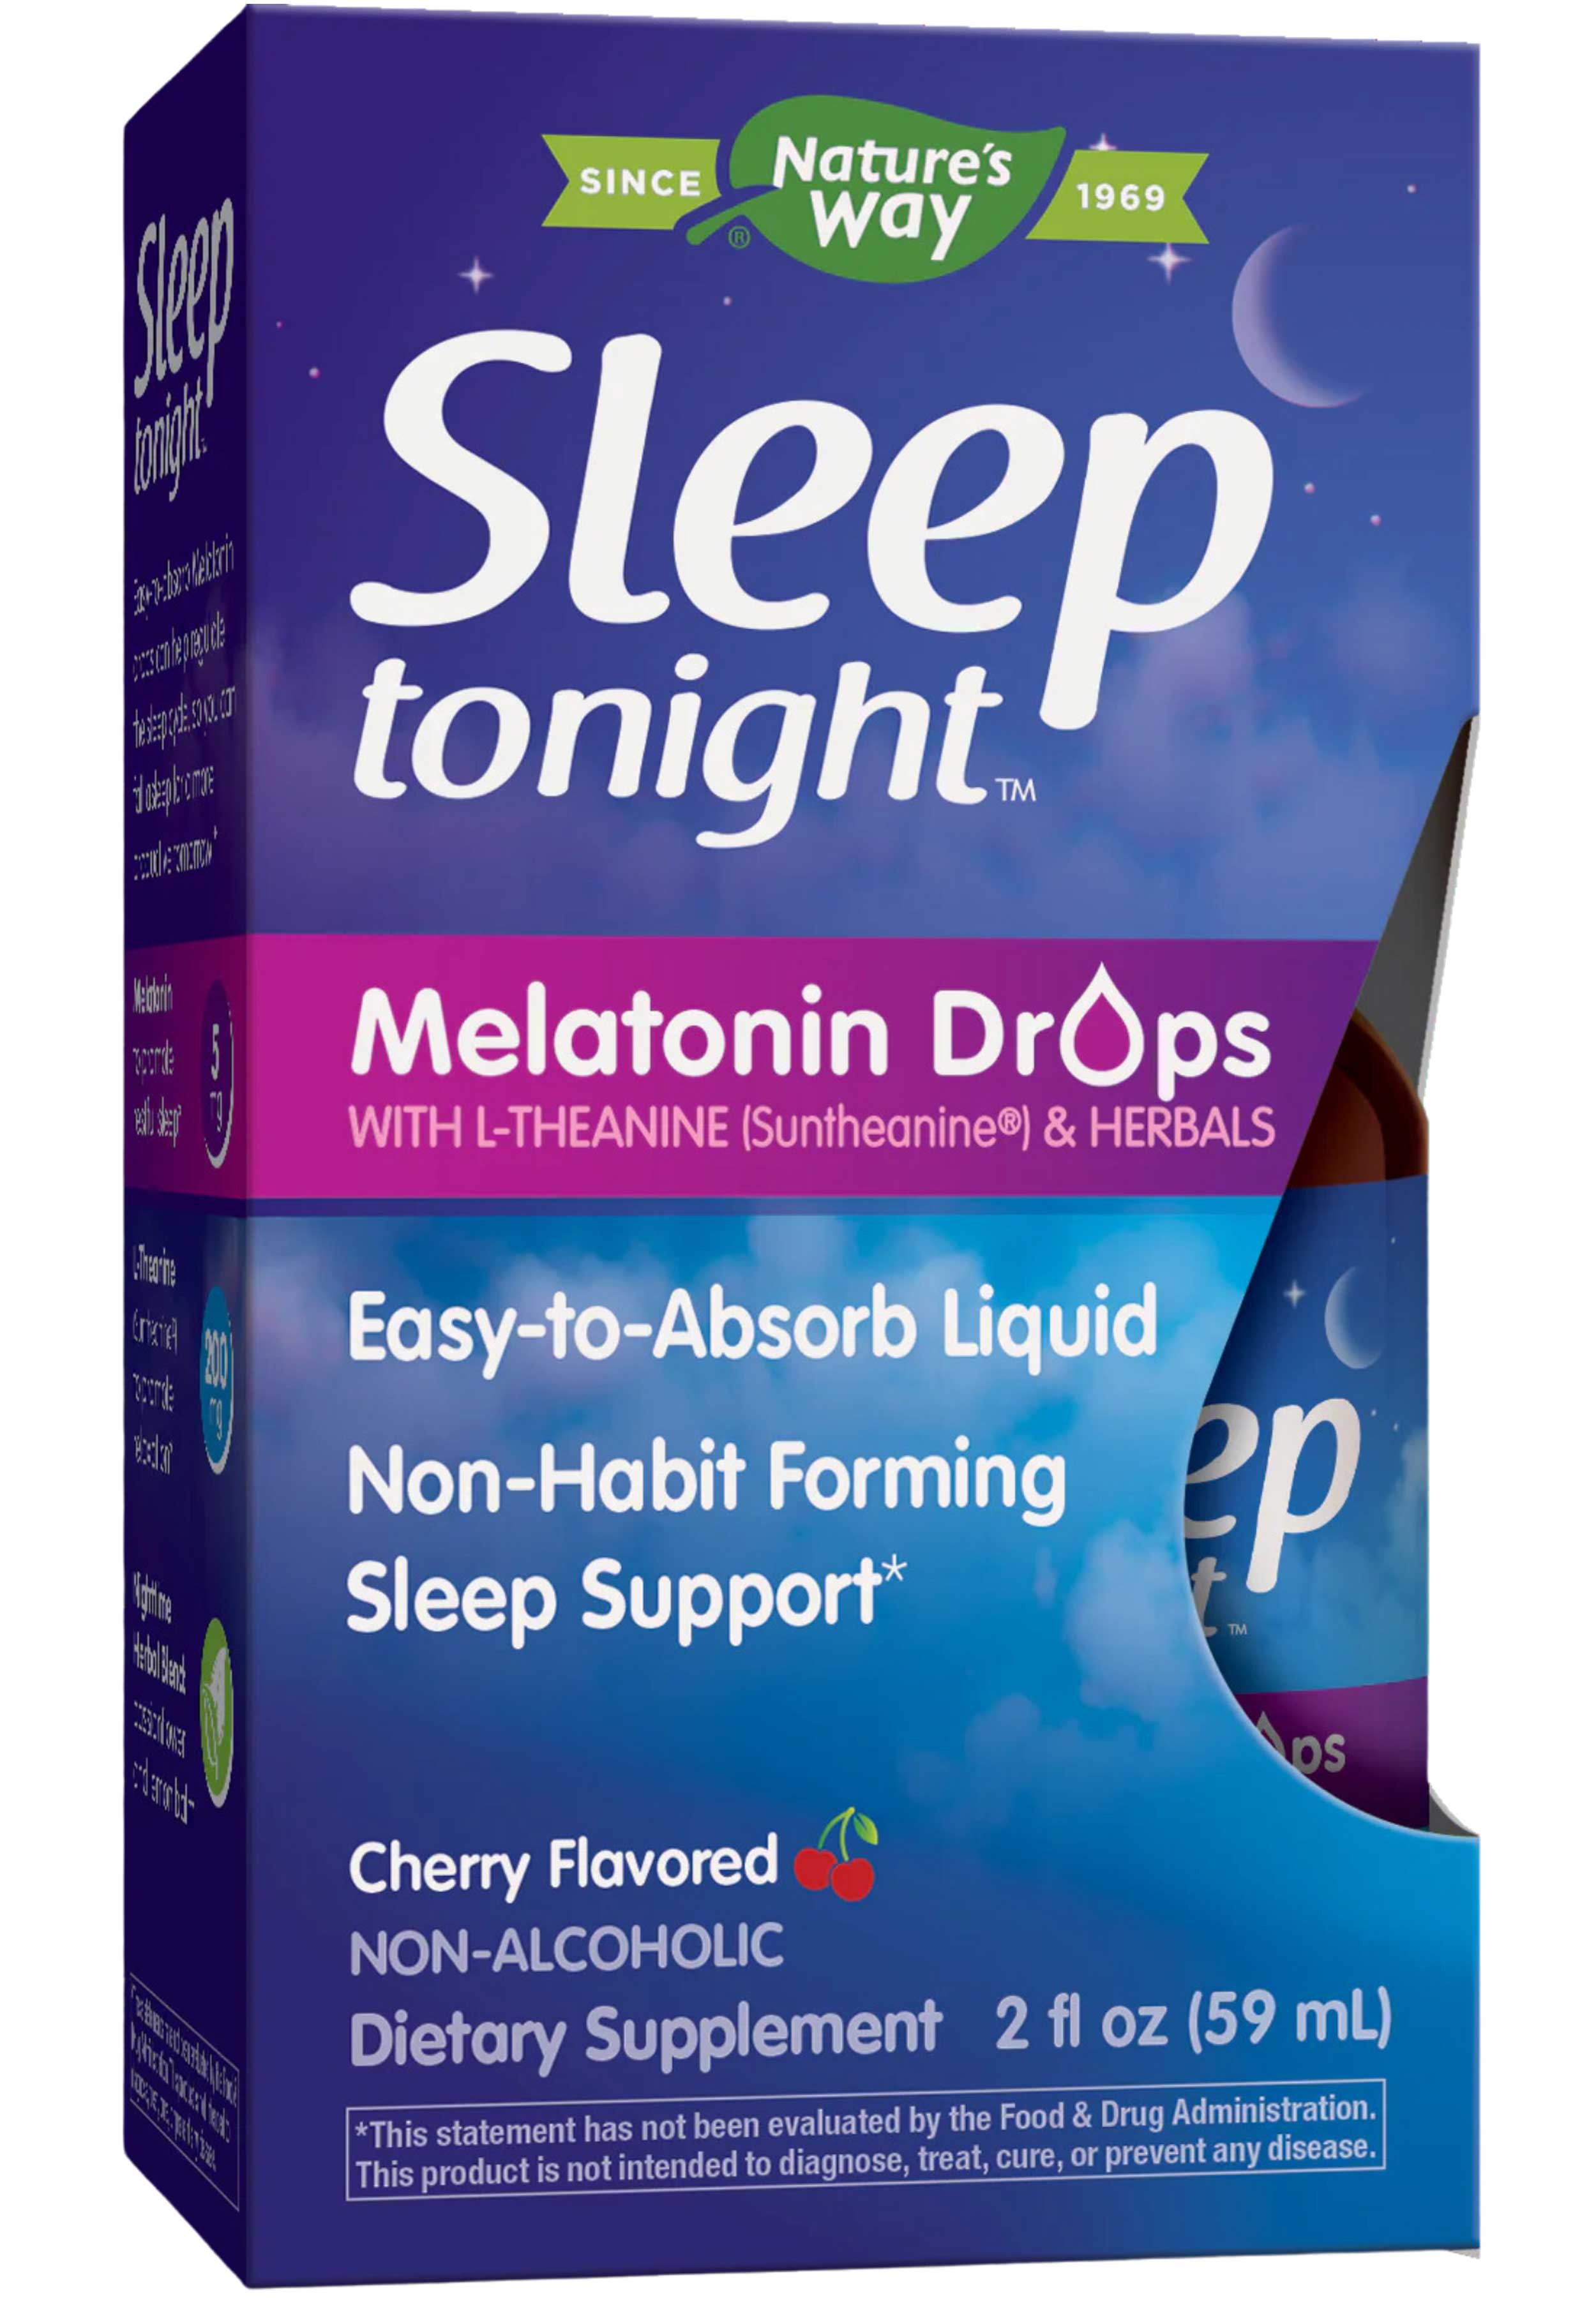 Nature's Way Sleep tonight Melatonin Drops